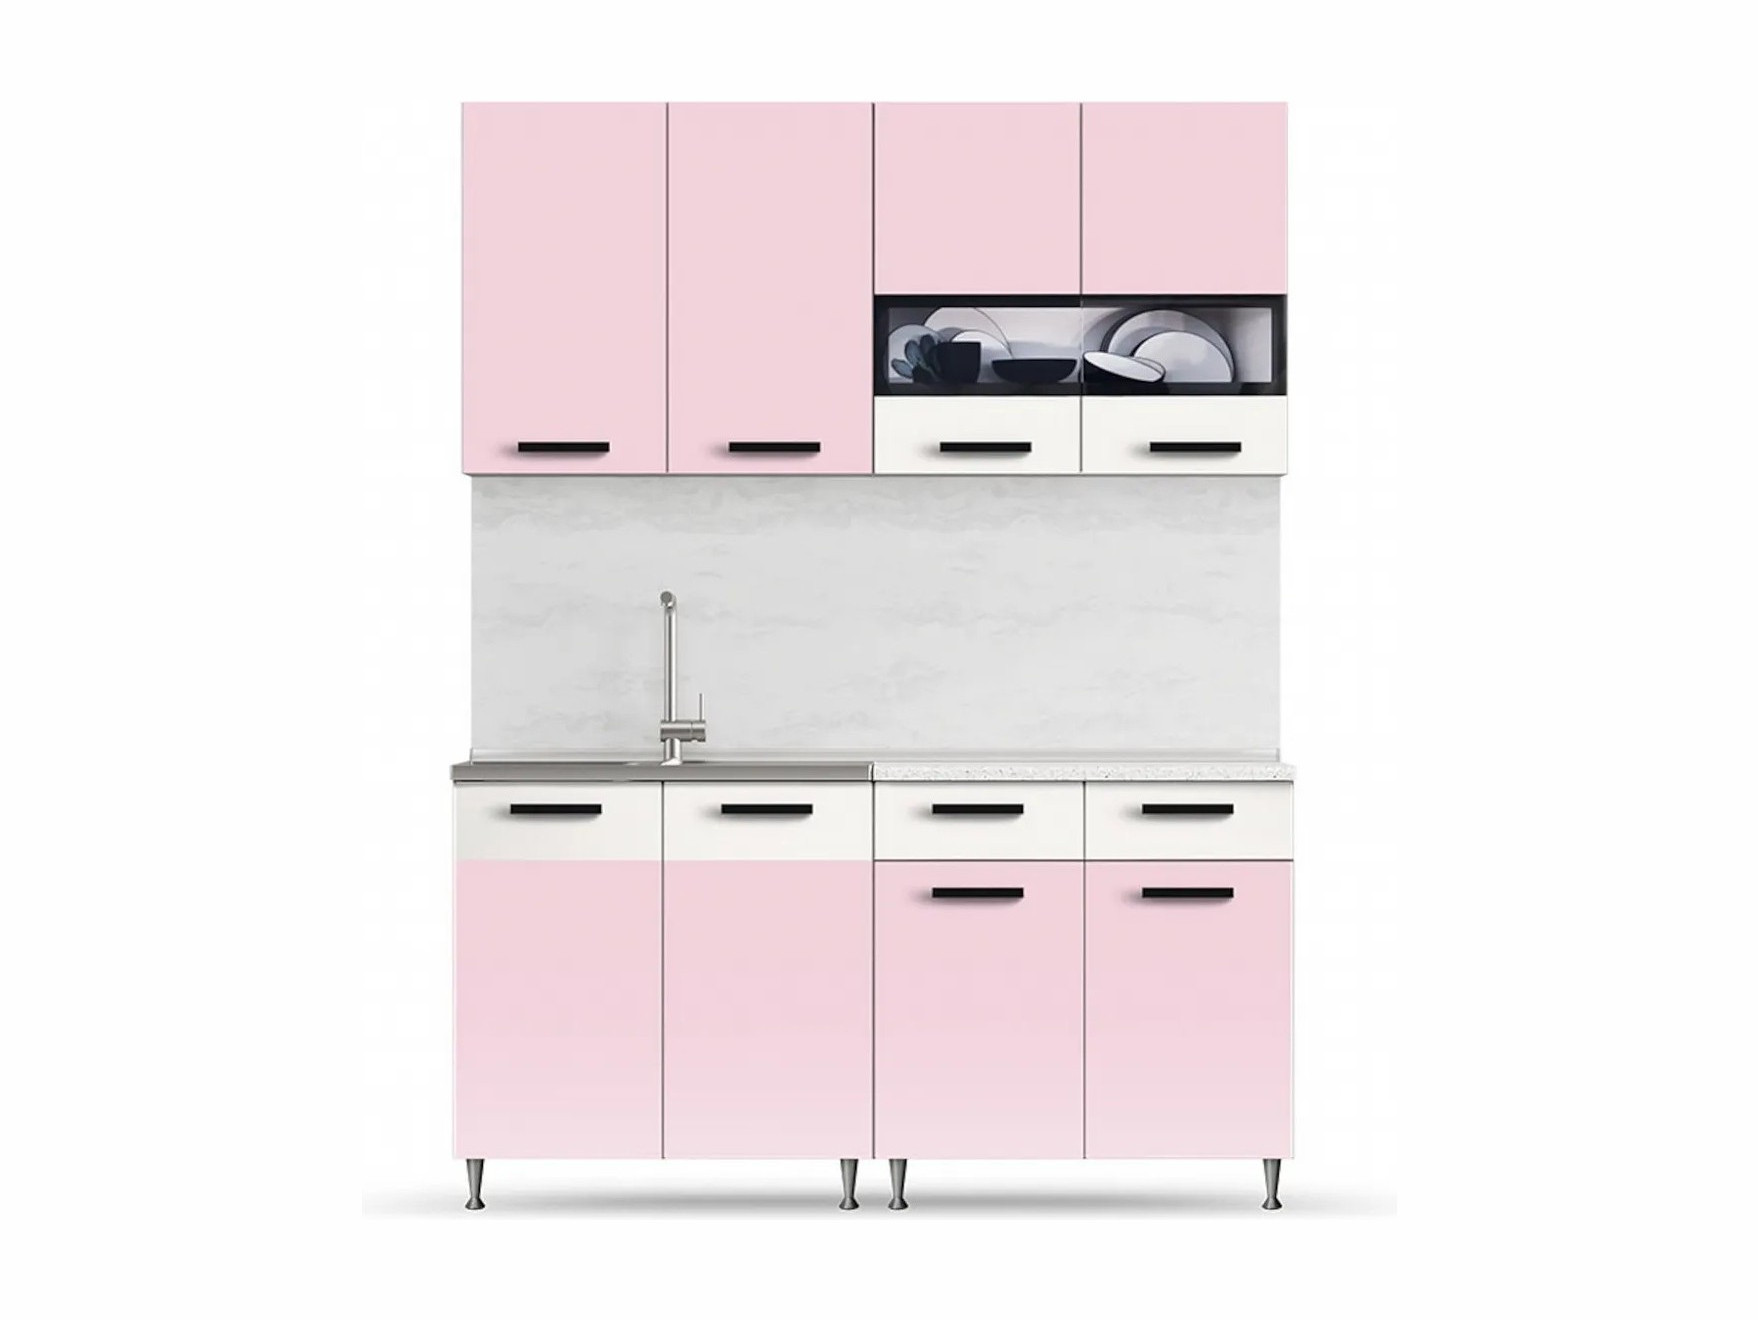 Кухня ЛДСП Рио 1600 (Розовый, Белый) Розовый, Белый, ЛДСП кухня лдсп рио 1500 розовый белый розовый белый лдсп